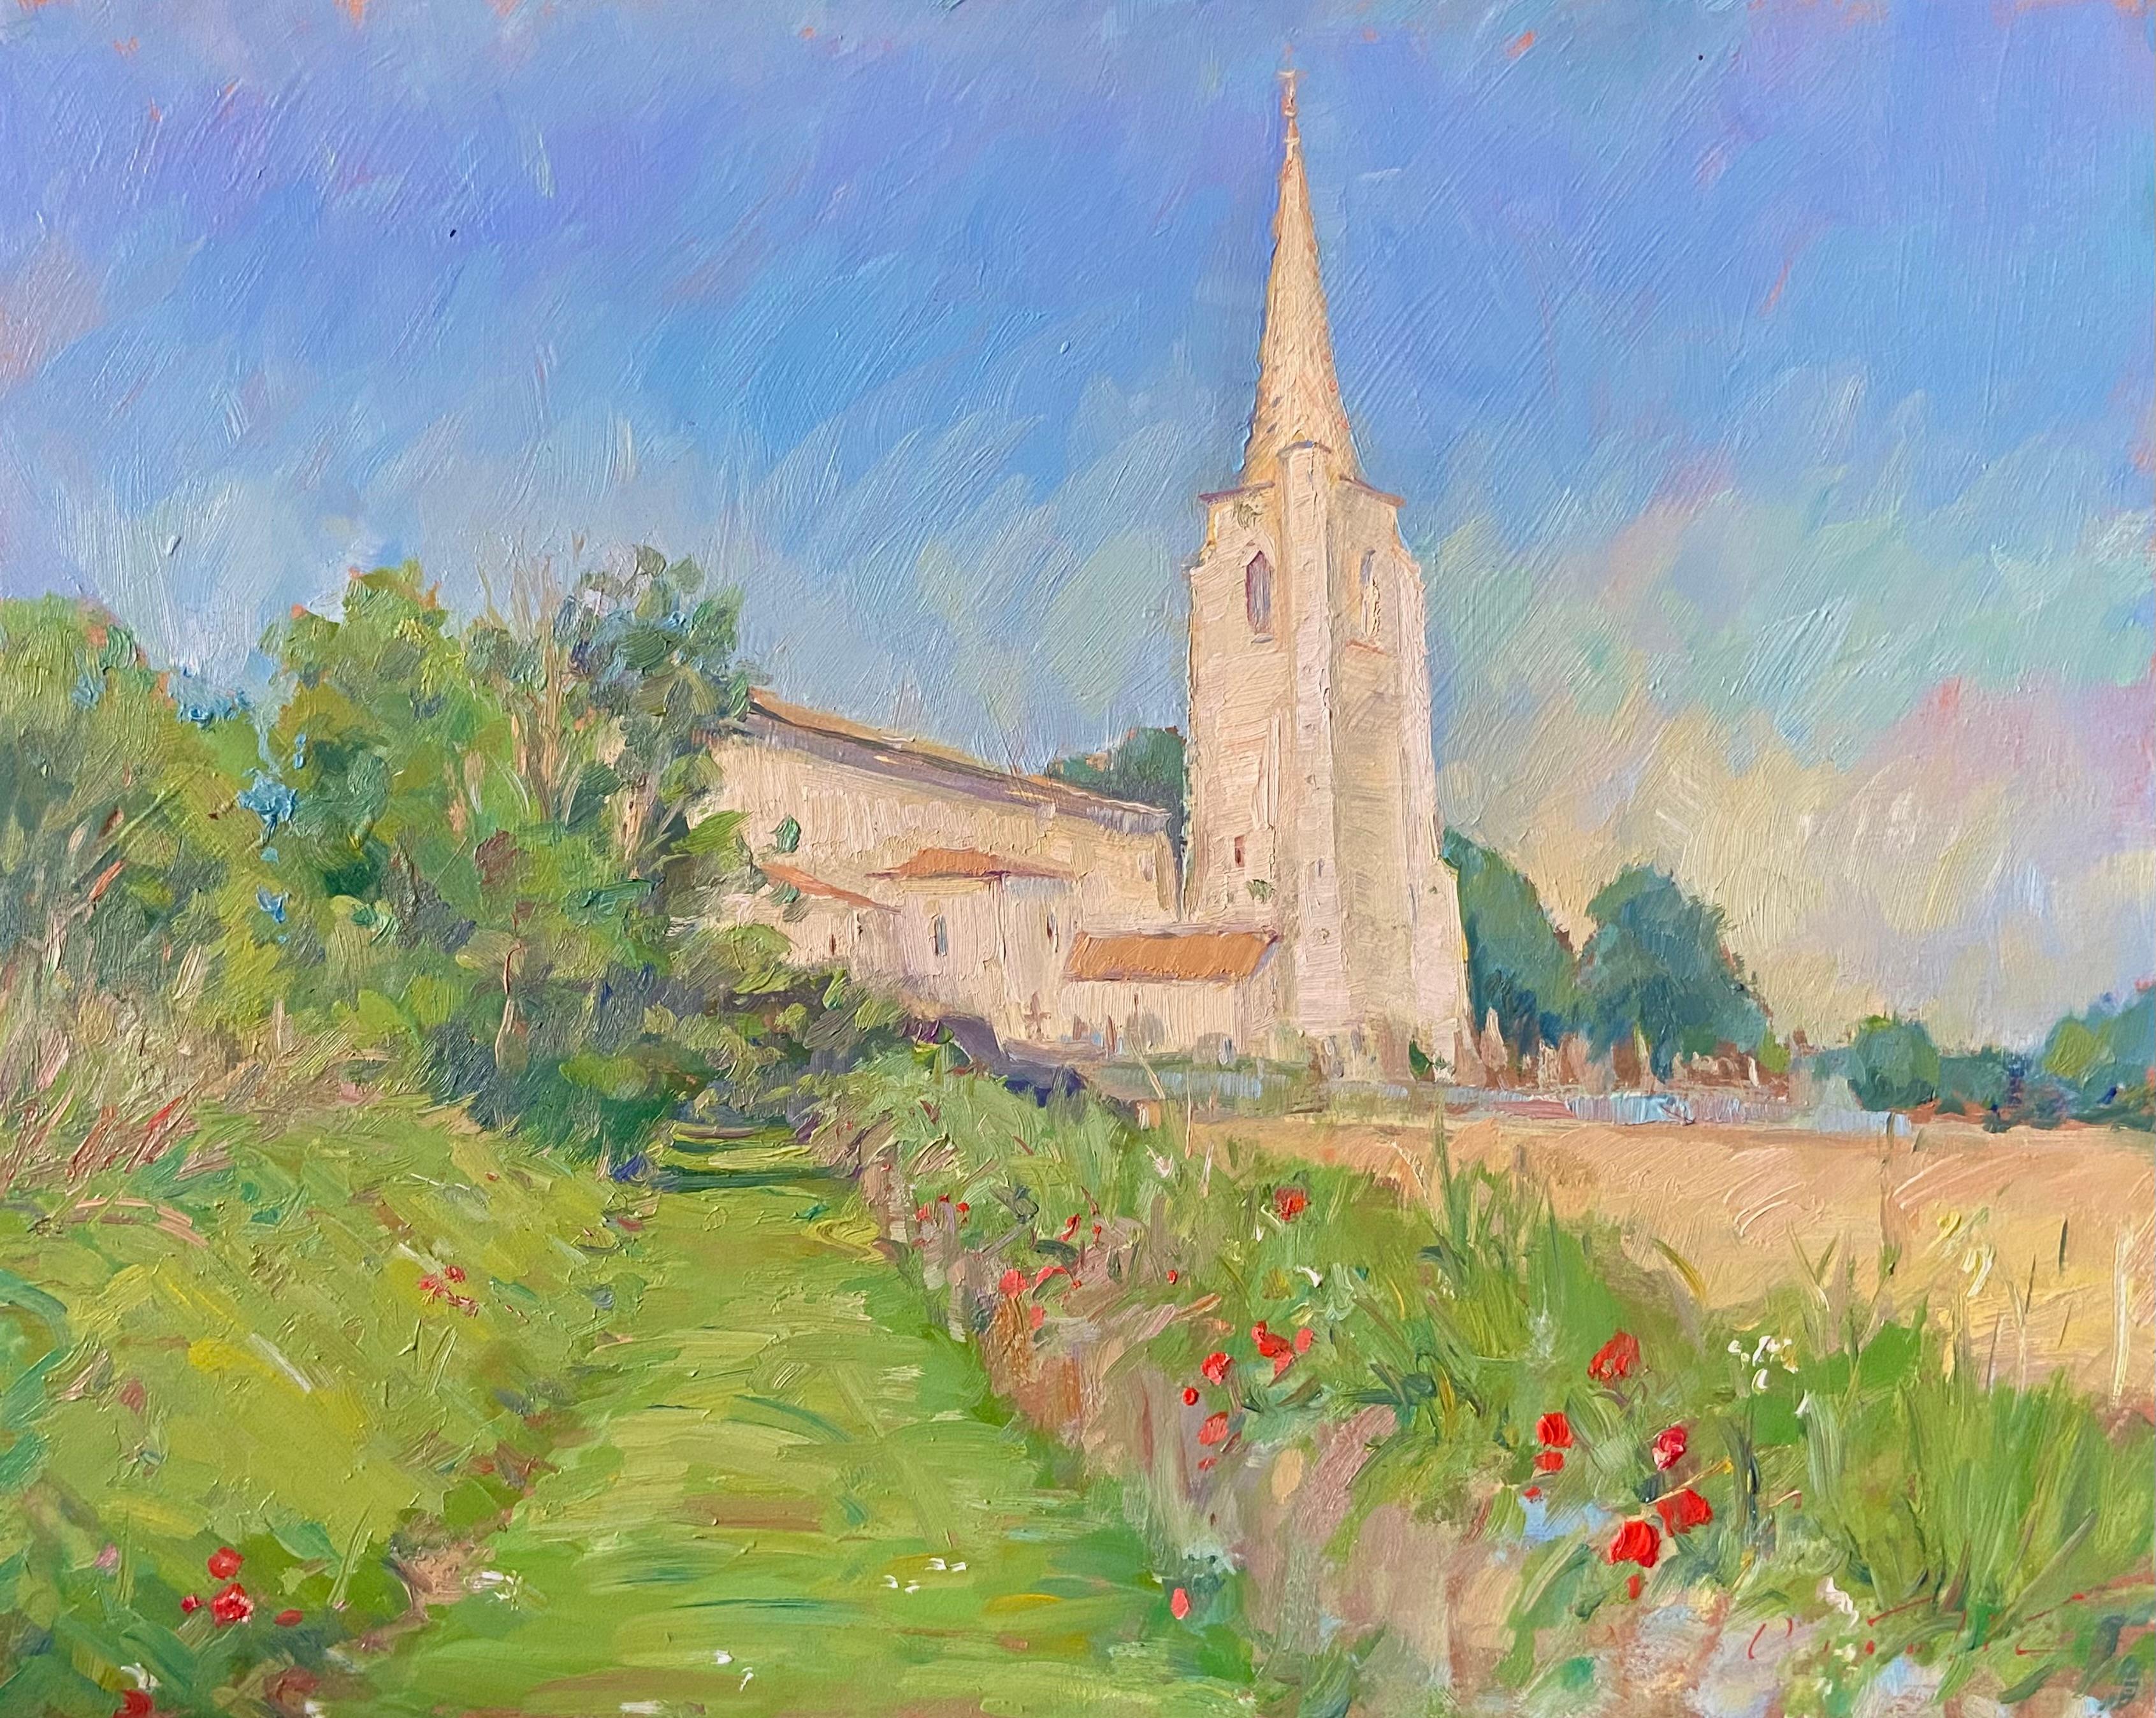 Tina Orsolic Dalessio Landscape Painting - "Eglise Saint-Jean Baptiste" Oil painting, impressionist,  plein air, France